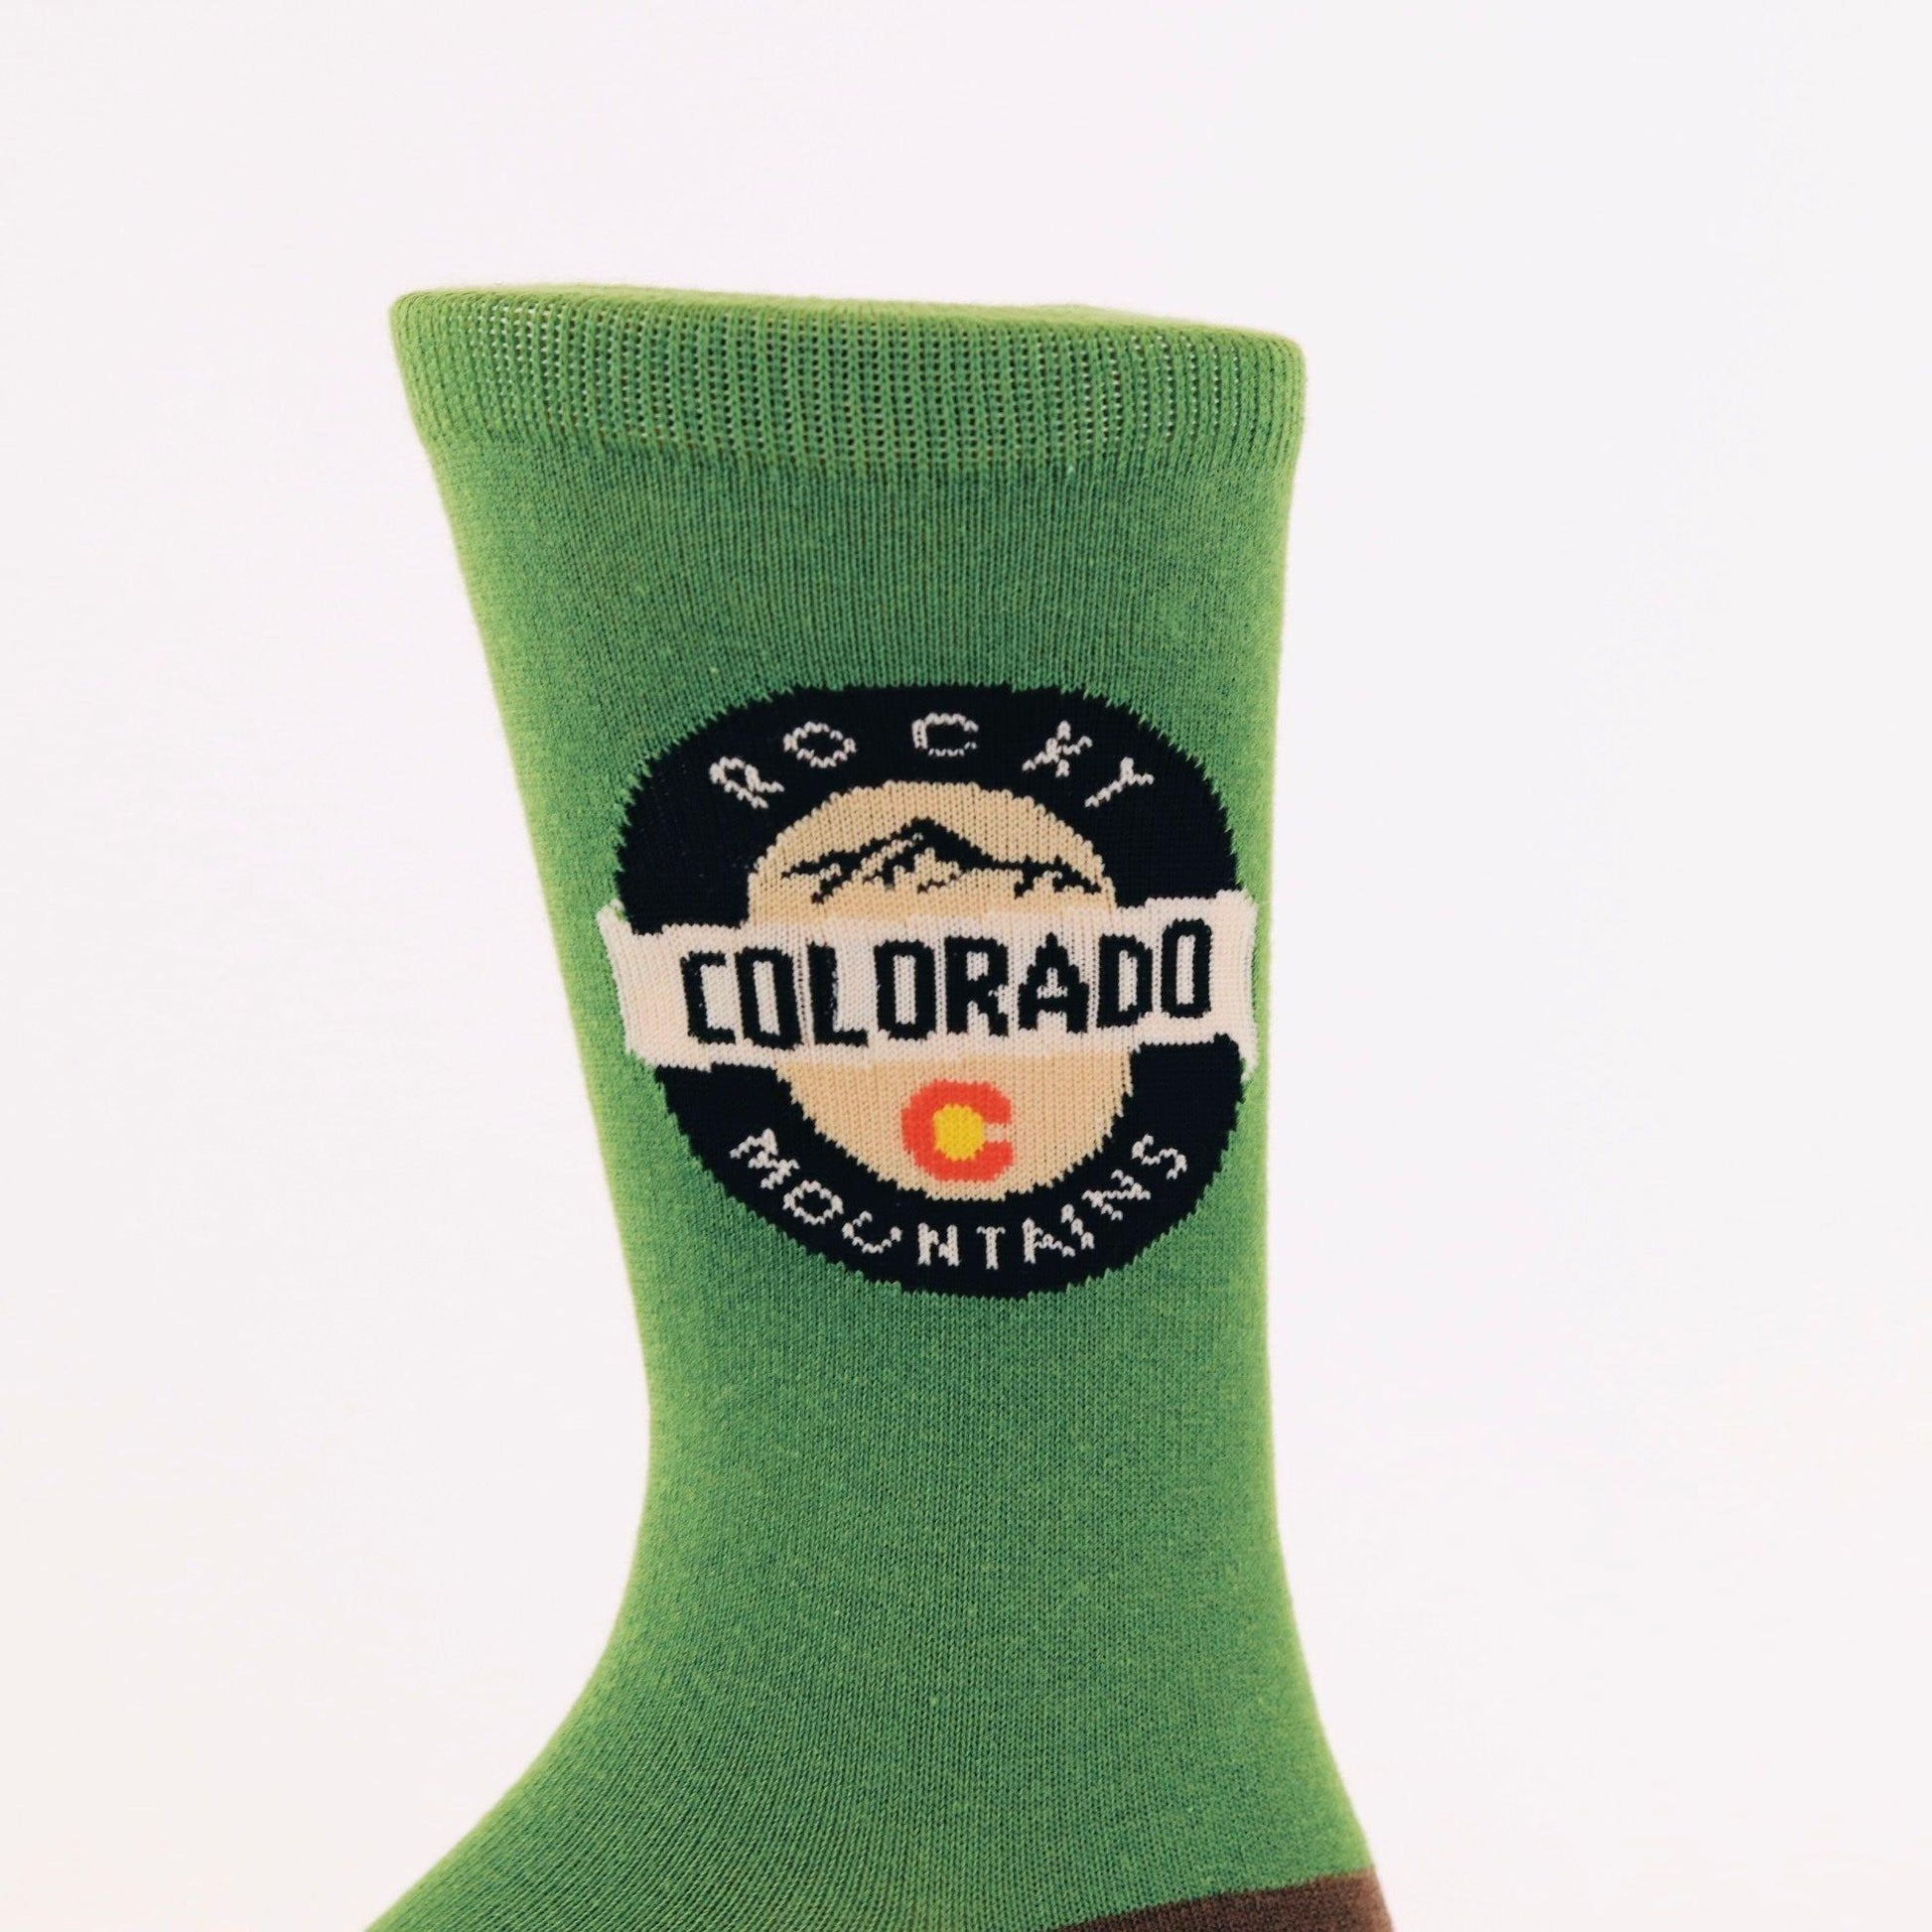 Colorado Drink Label Socks - Love From USA